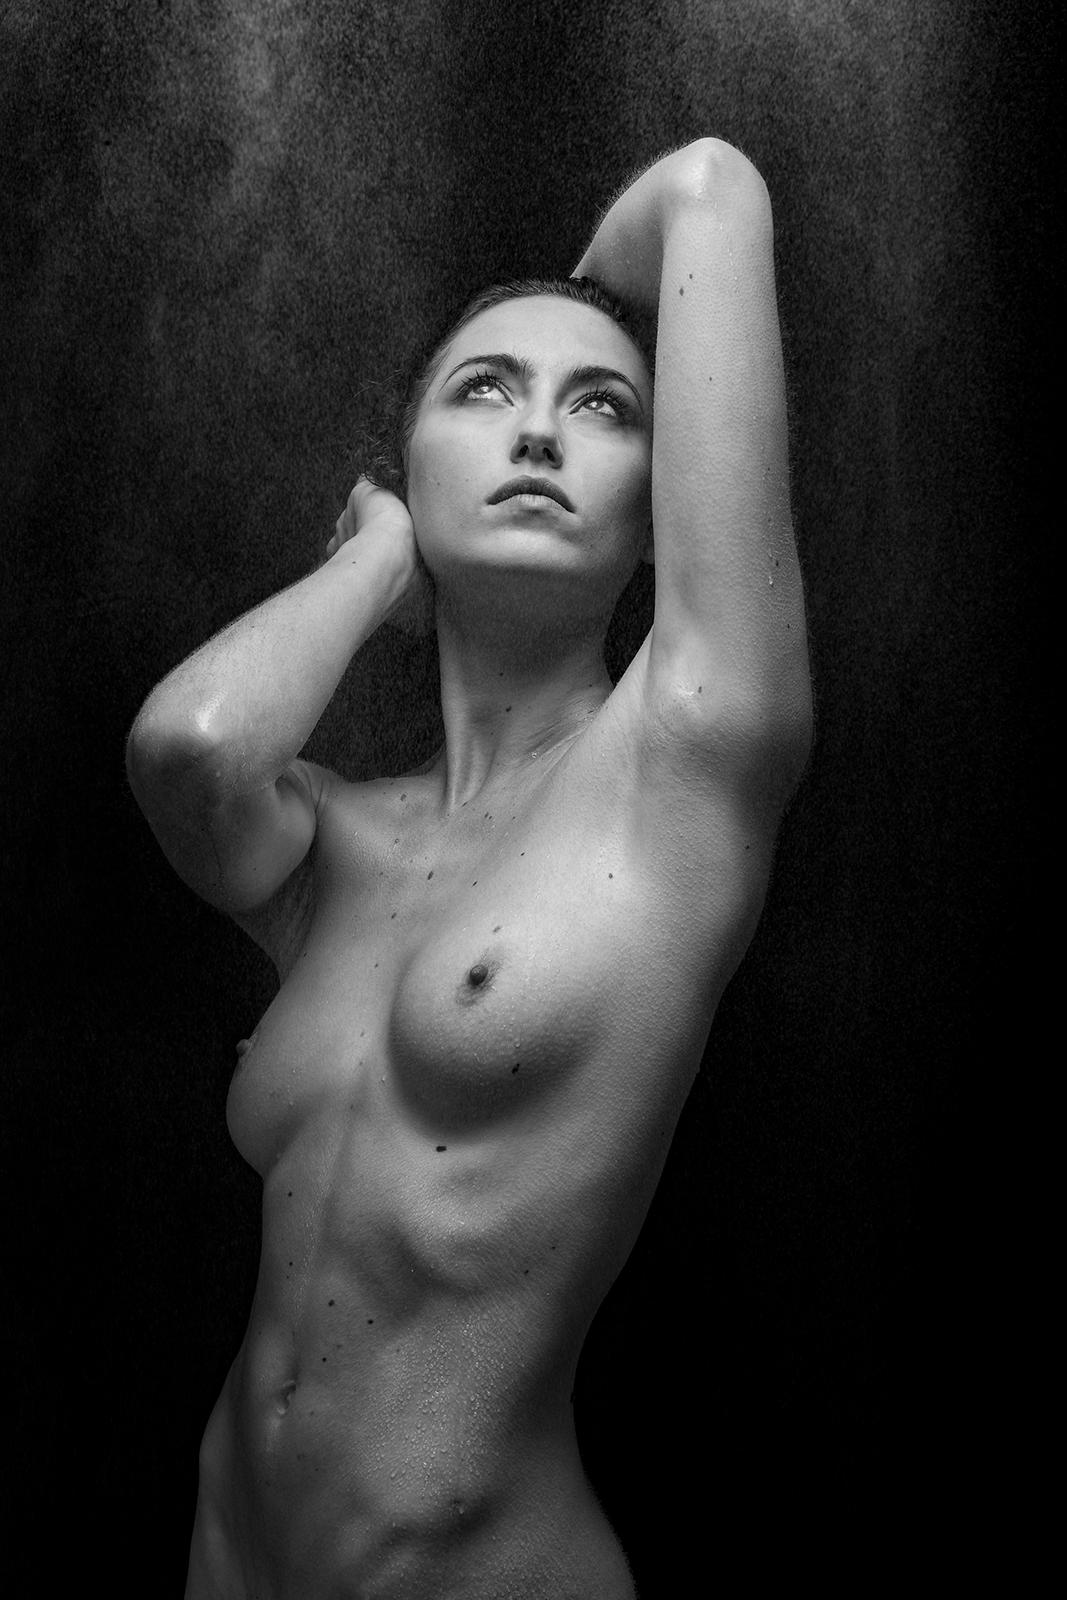 Ian Sanderson Nude Photograph - Mist - Signed limited edition nude art print, Black White Photo, Sensual model